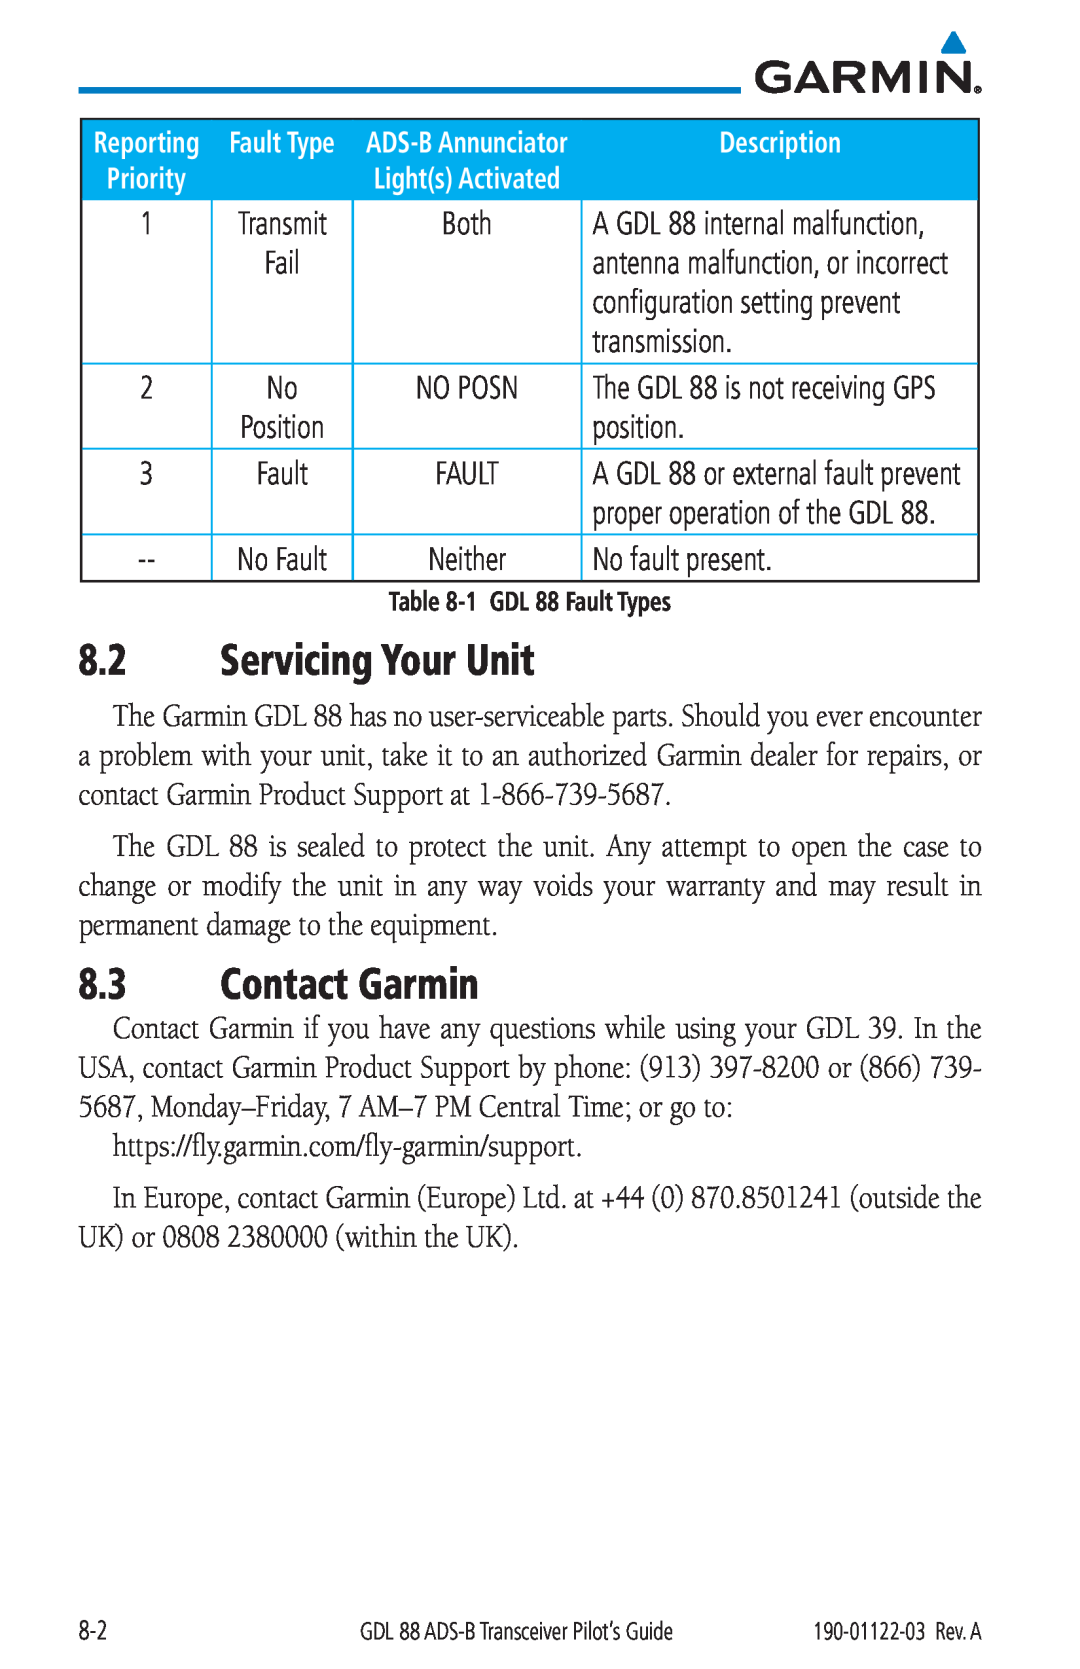 Garmin Servicing Your Unit, Contact Garmin, Description, configuration setting prevent, 1 GDL 88 Fault Types, Reporting 